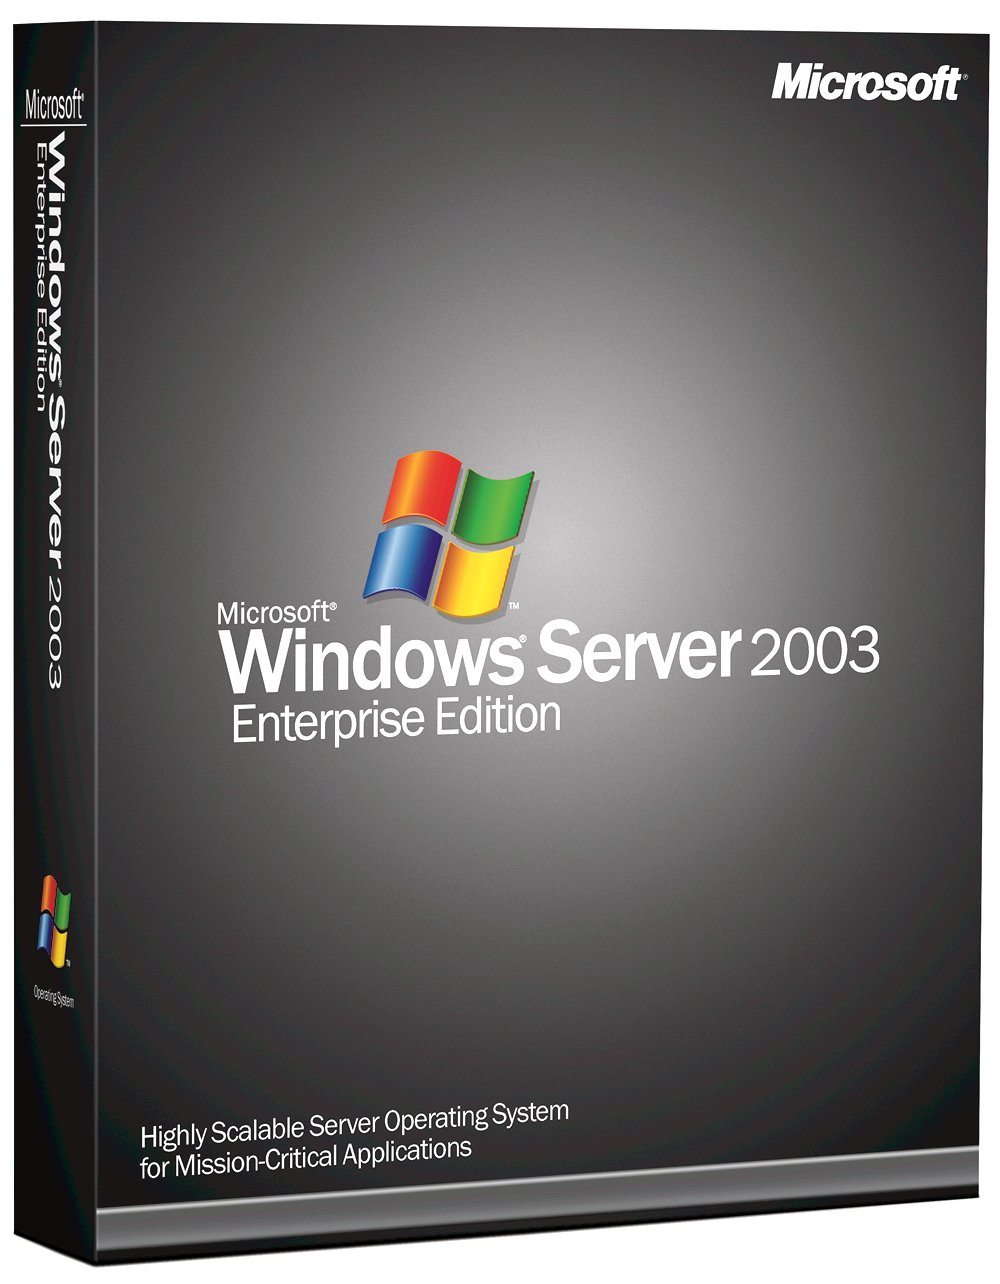 DD包-WindowsServer2003x86-精简-仅291MB-系统占用内存小！-VPS SO